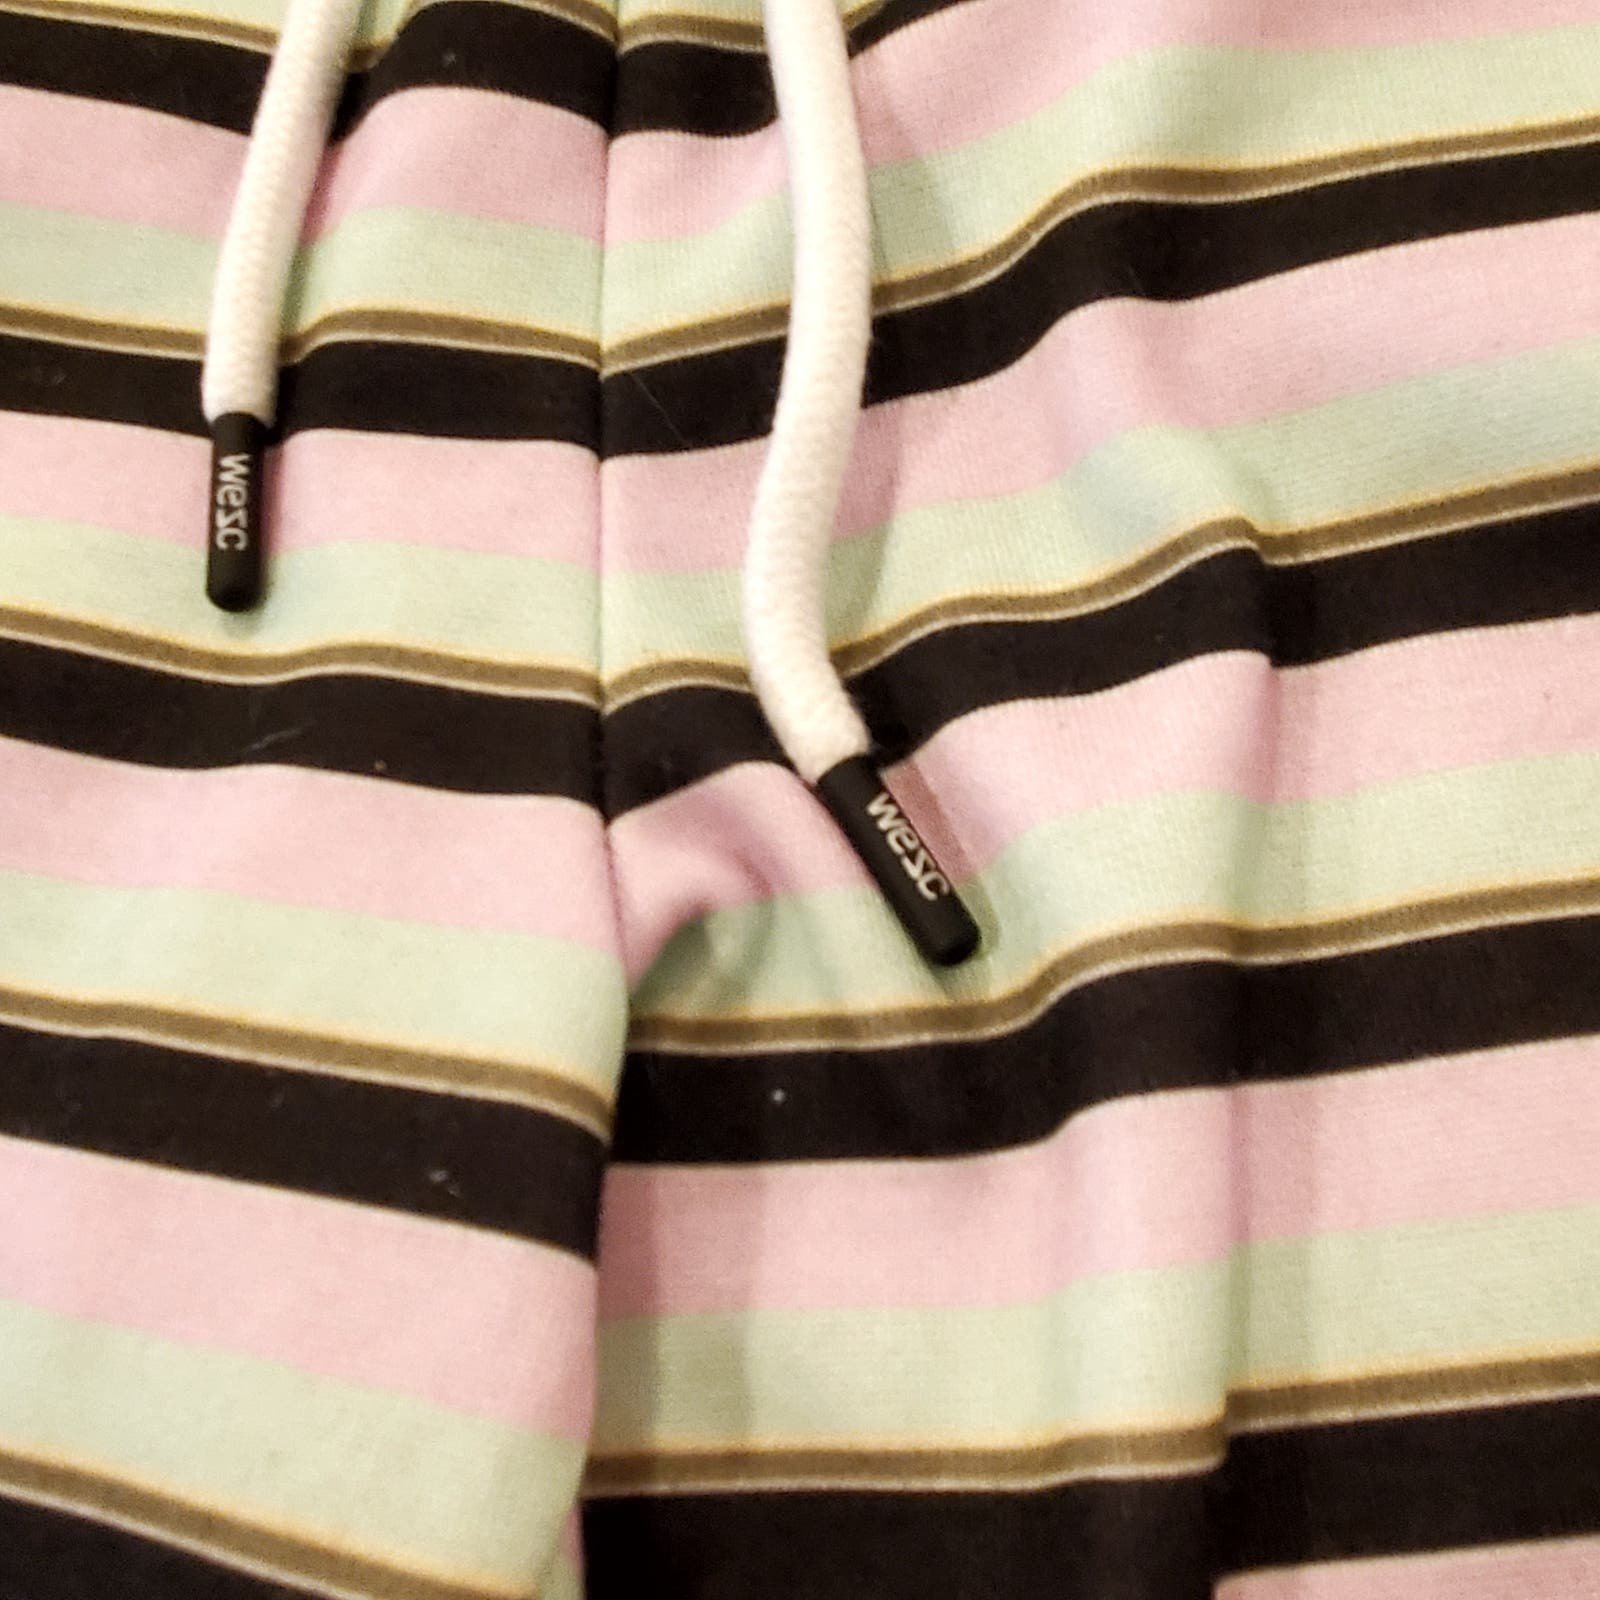 Swedish Conspiracy by Wezc Colorful Striped Sweat Shorts F7Q1sAcPH